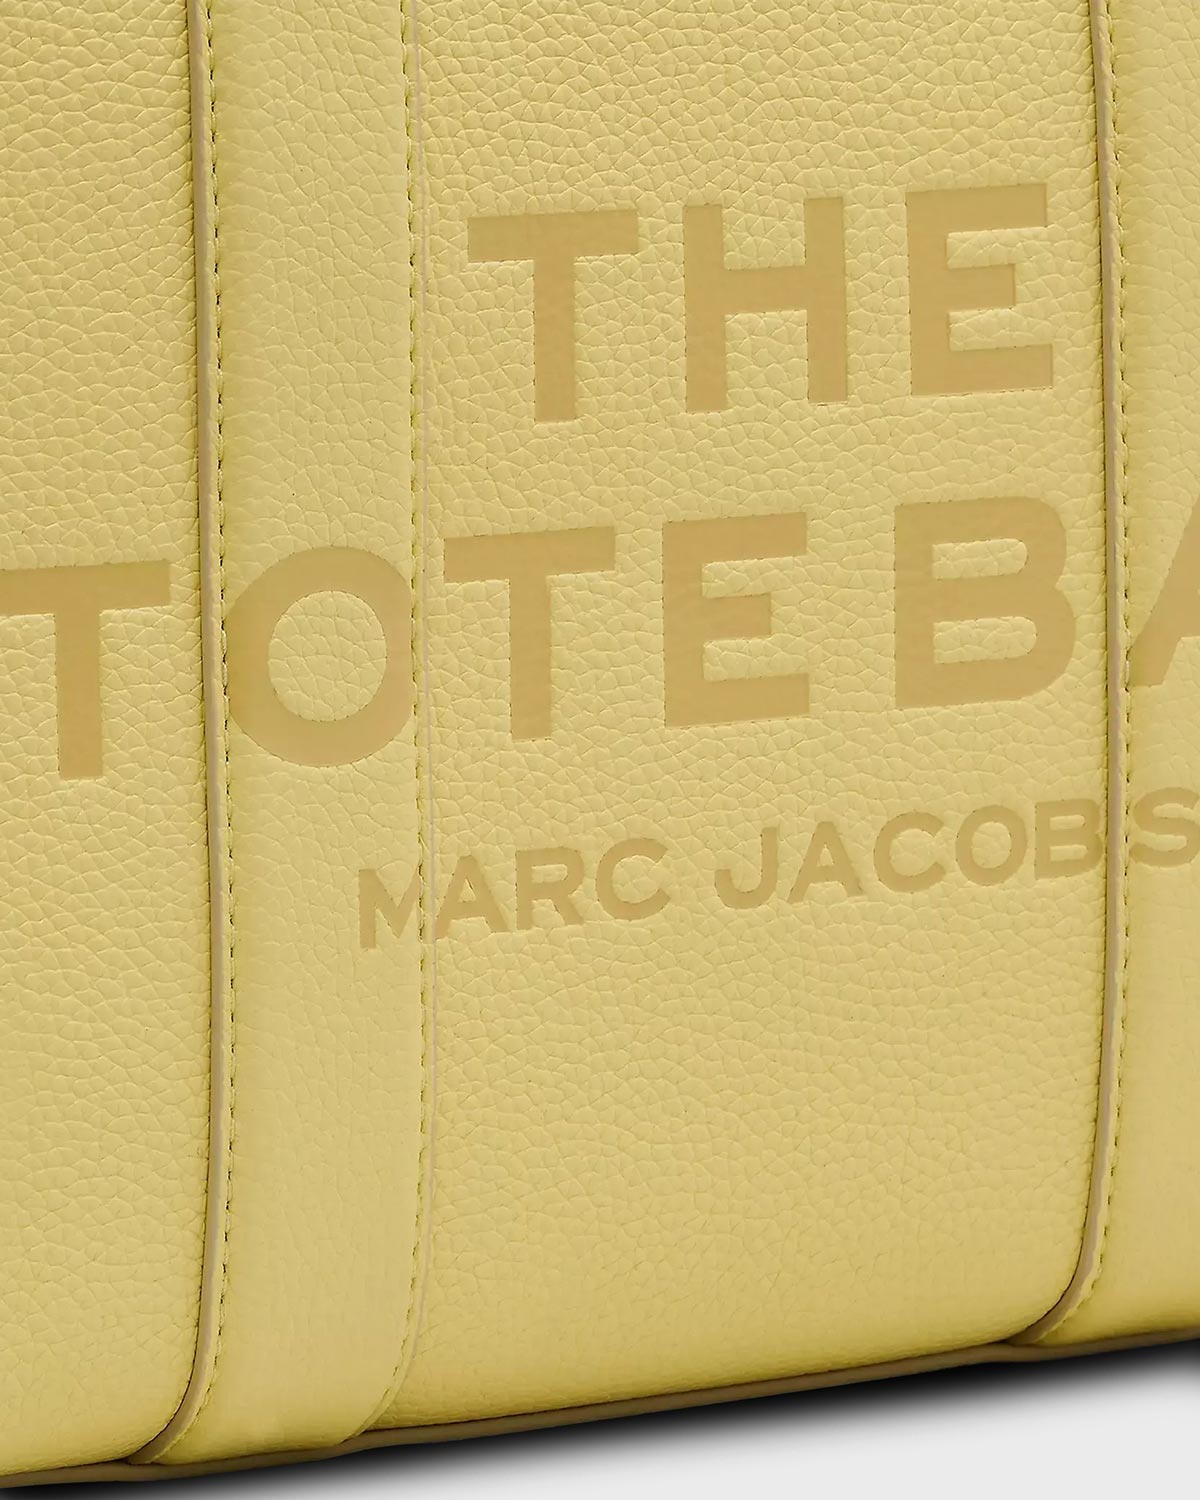 Marc Jacobs Tasche The Leather Medium Tote Bag Custard myMEID